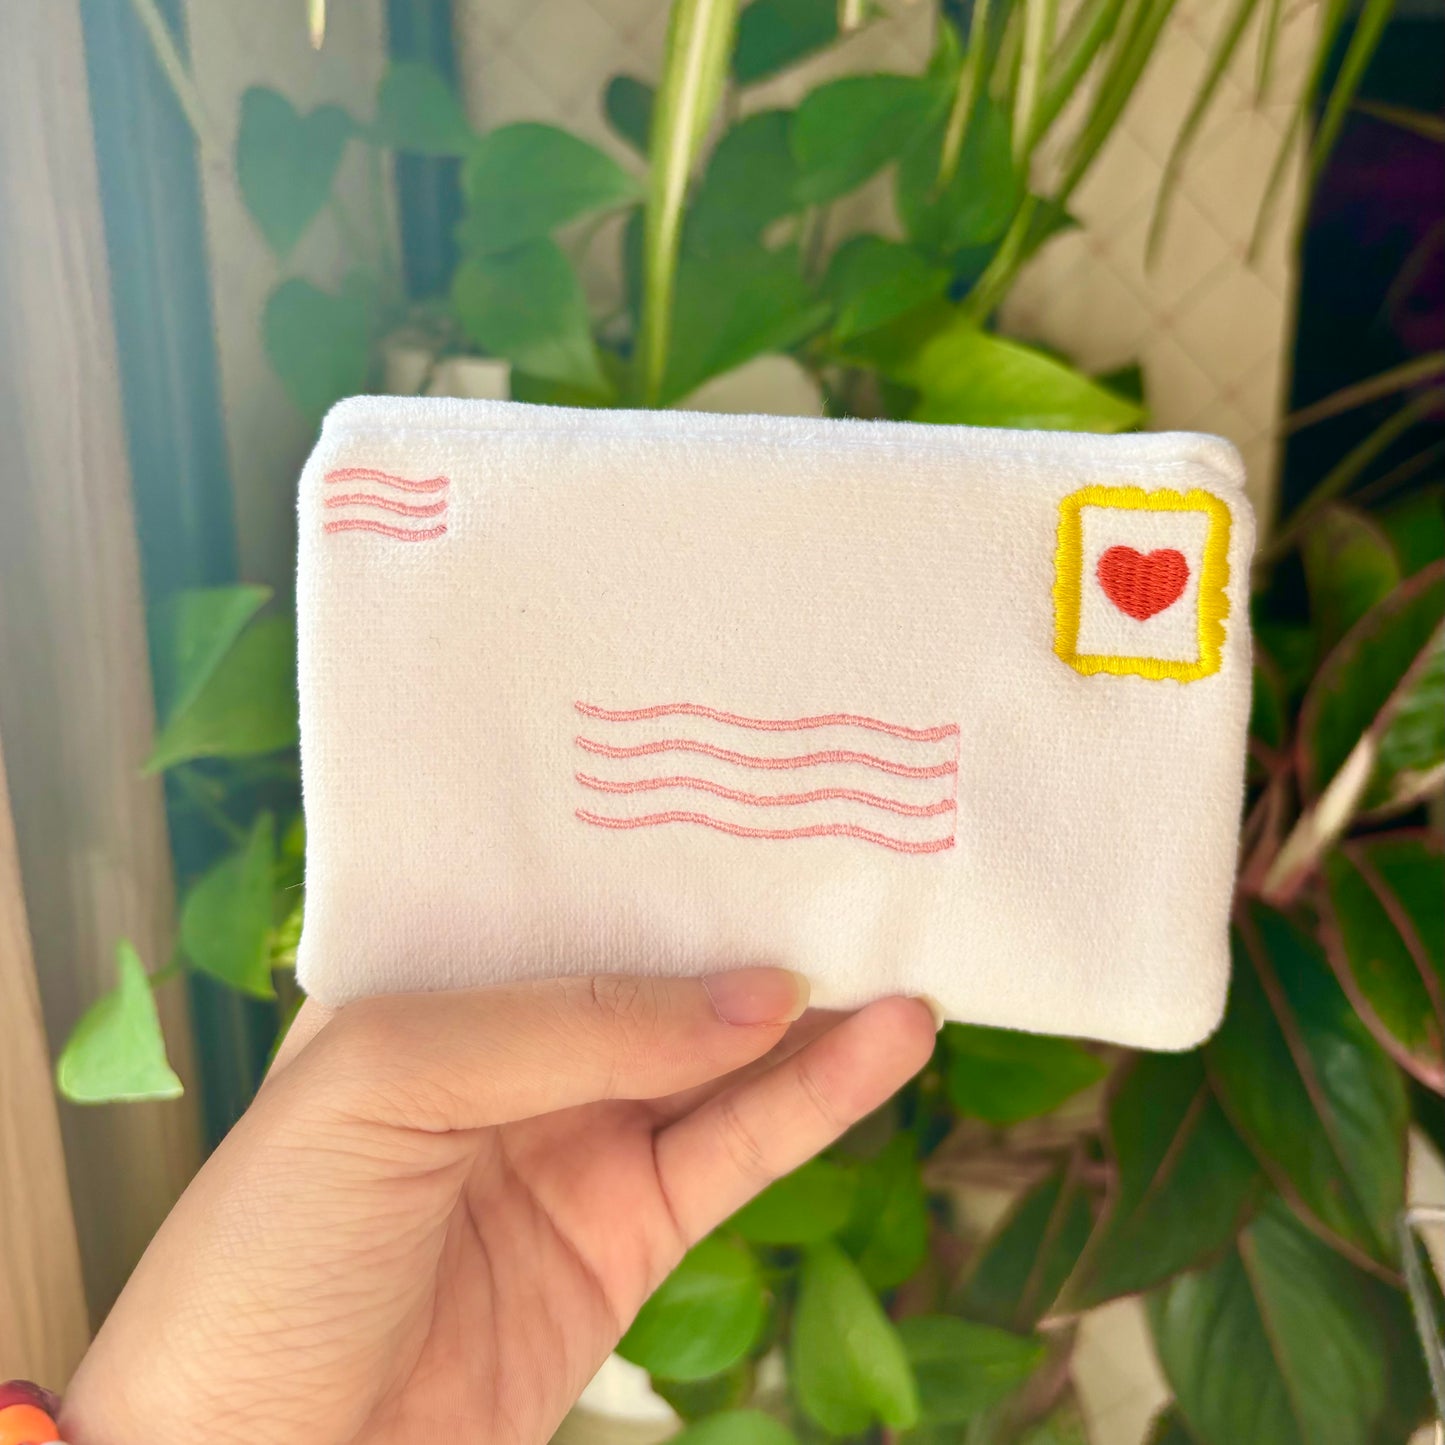 Love Letter Wallet